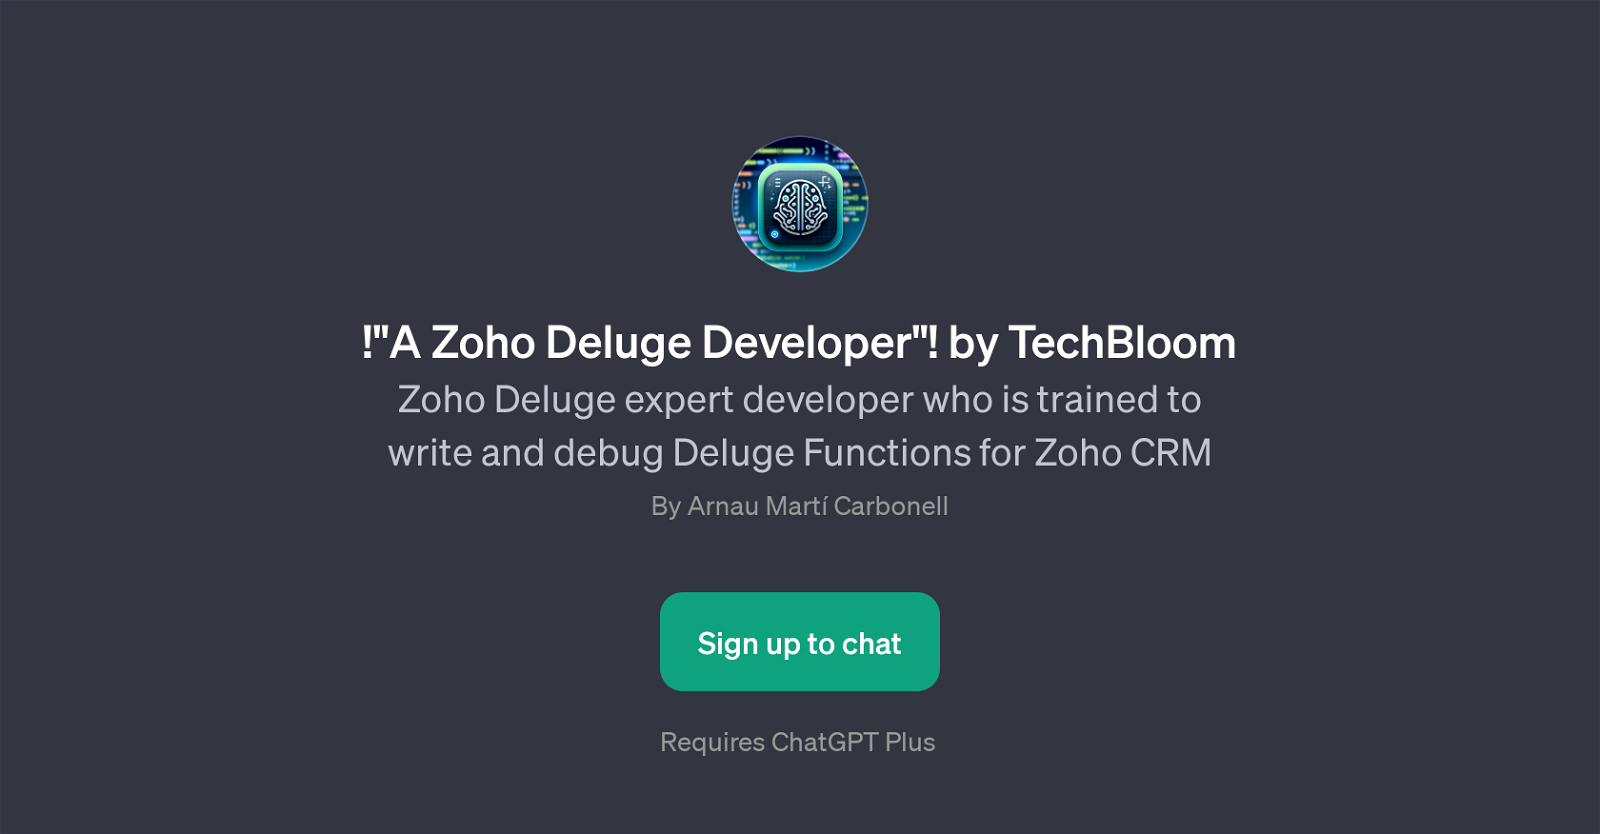 A Zoho Deluge Developer by TechBloom website